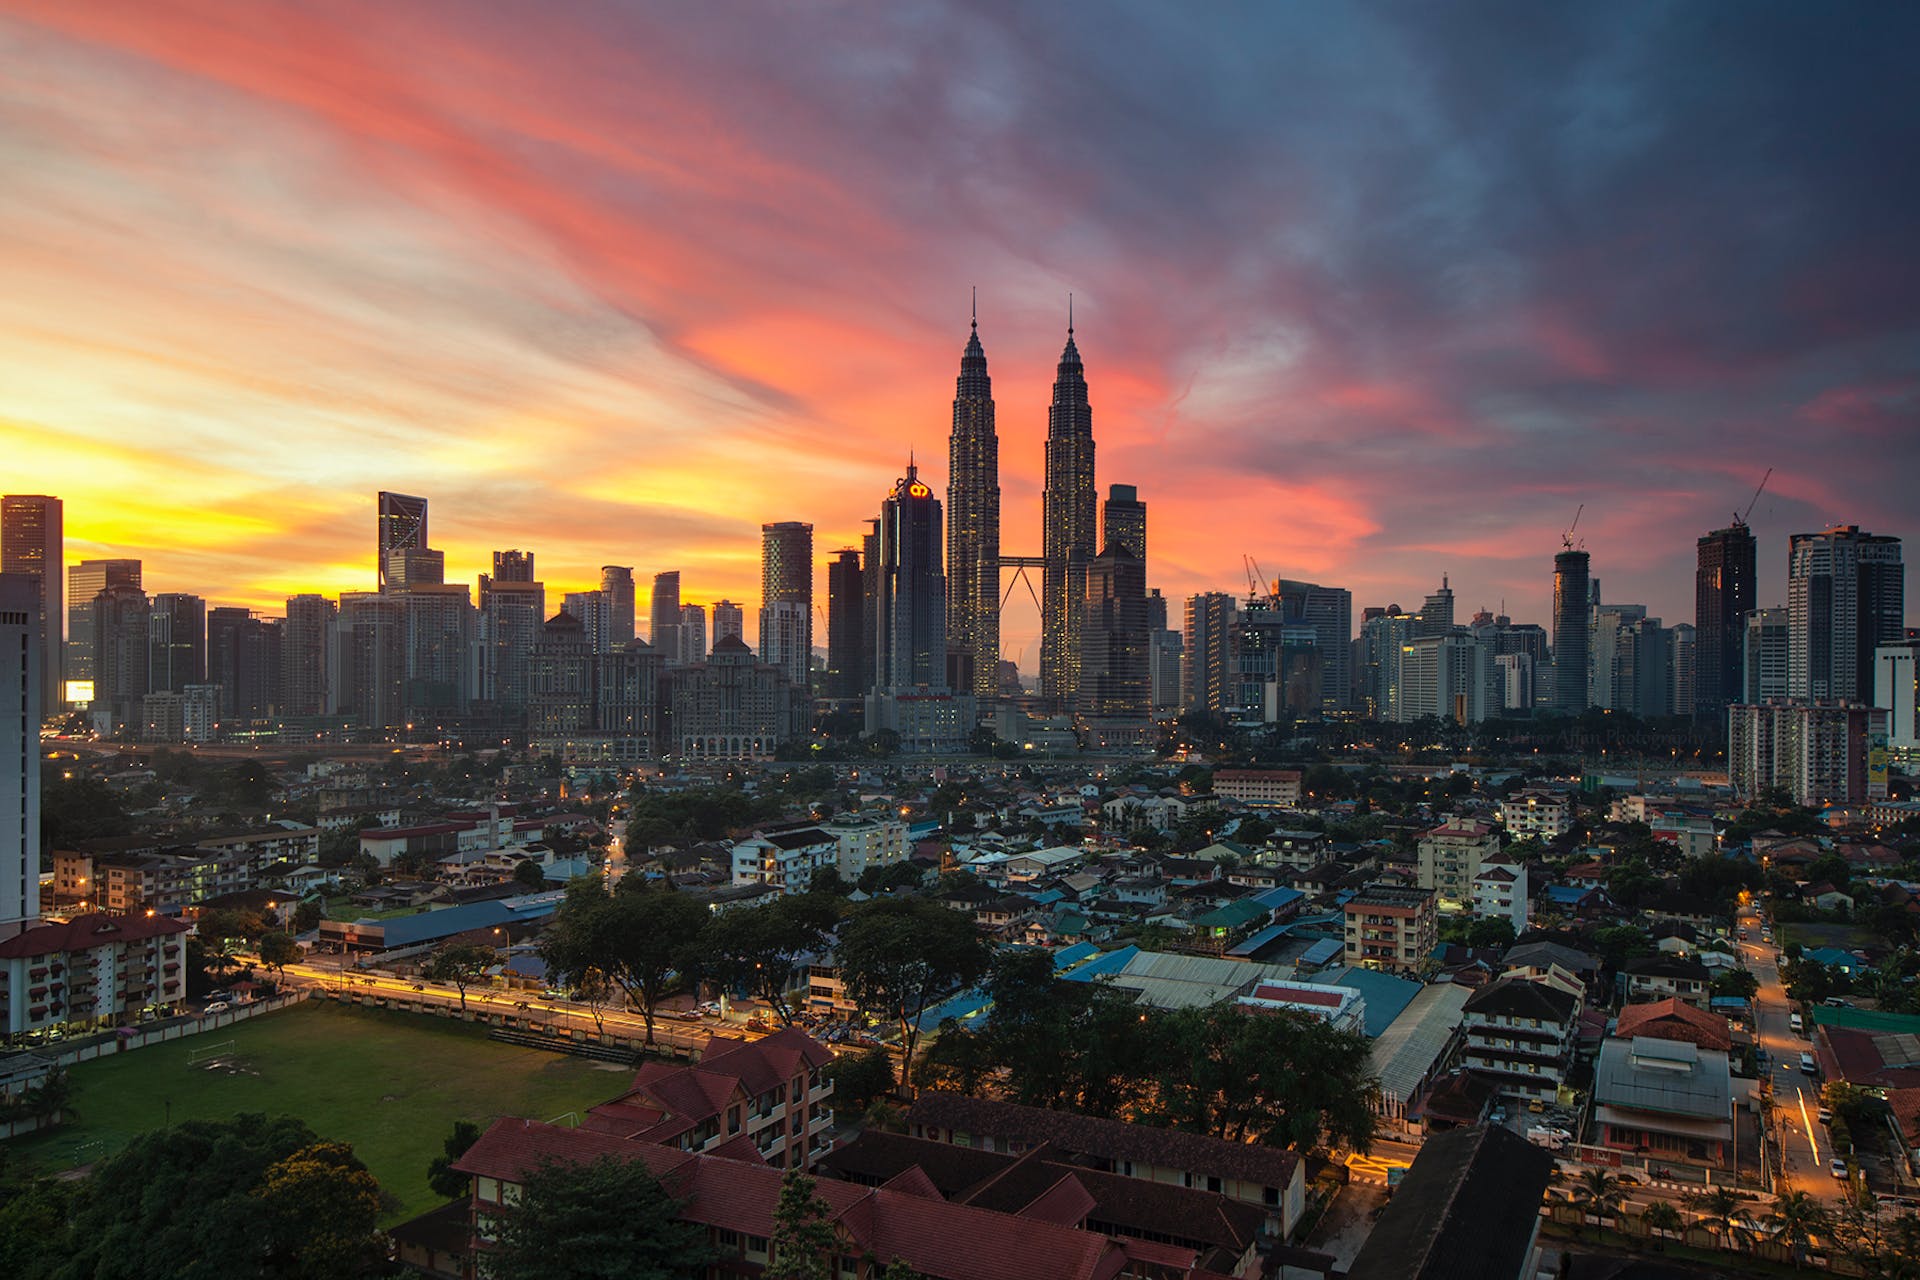 Scenic image of Malaysia